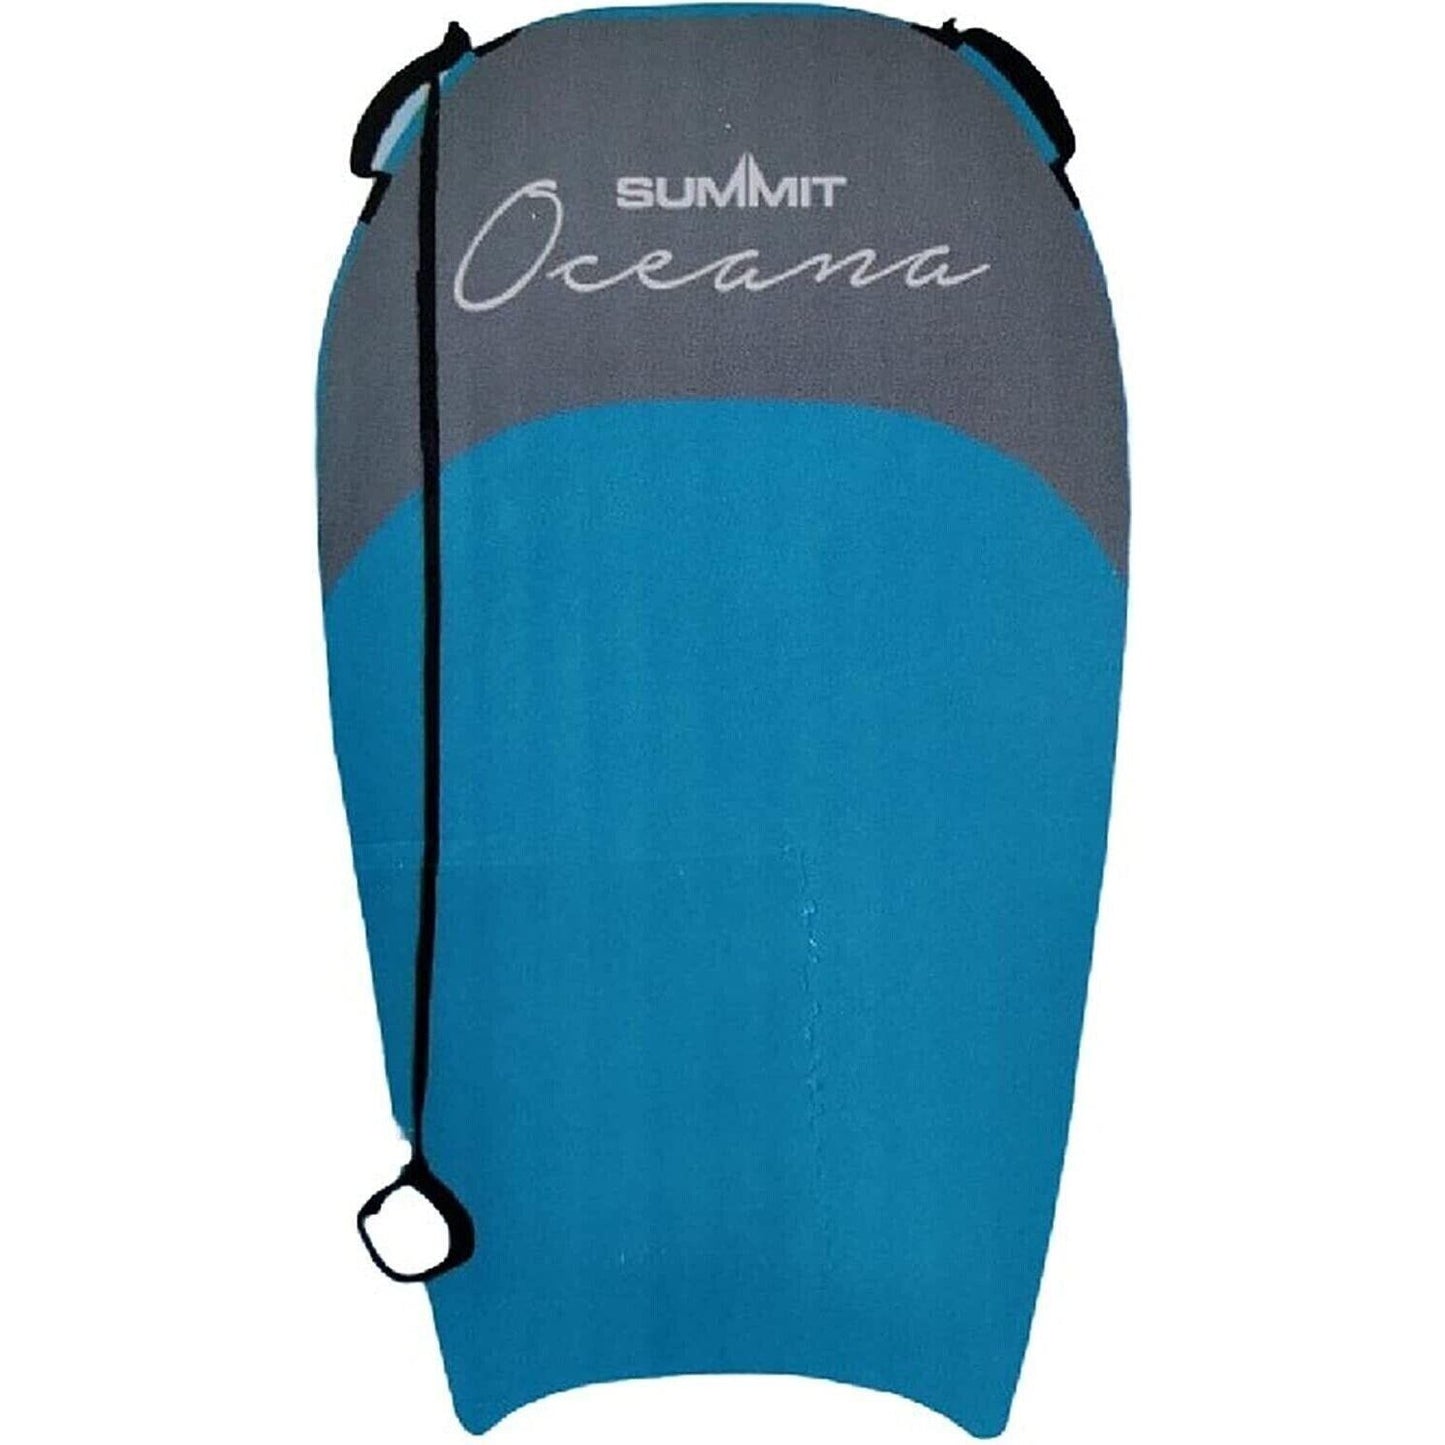 New Summit Oceana Single Inflatable Body Board Blue